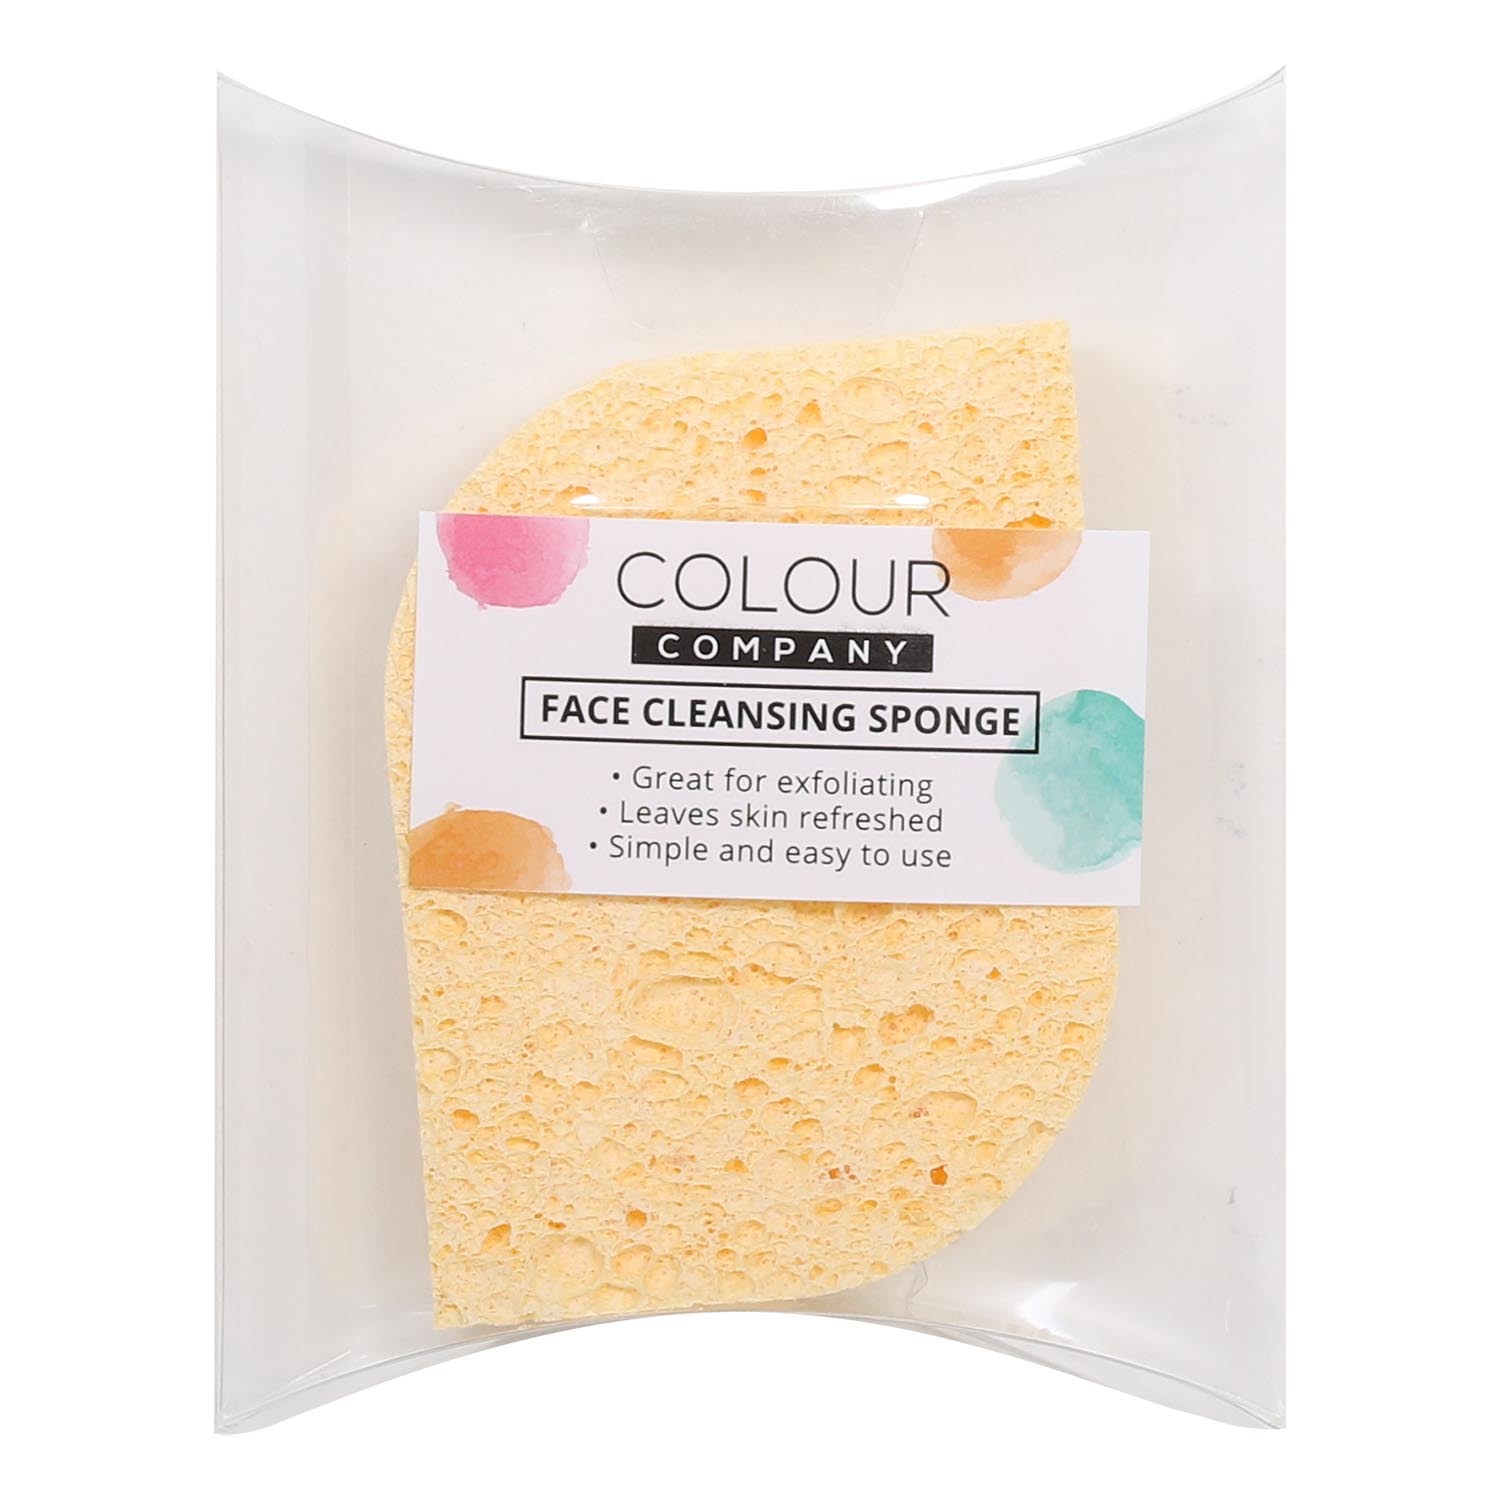 Colour Company Face Cleansing Sponge Image